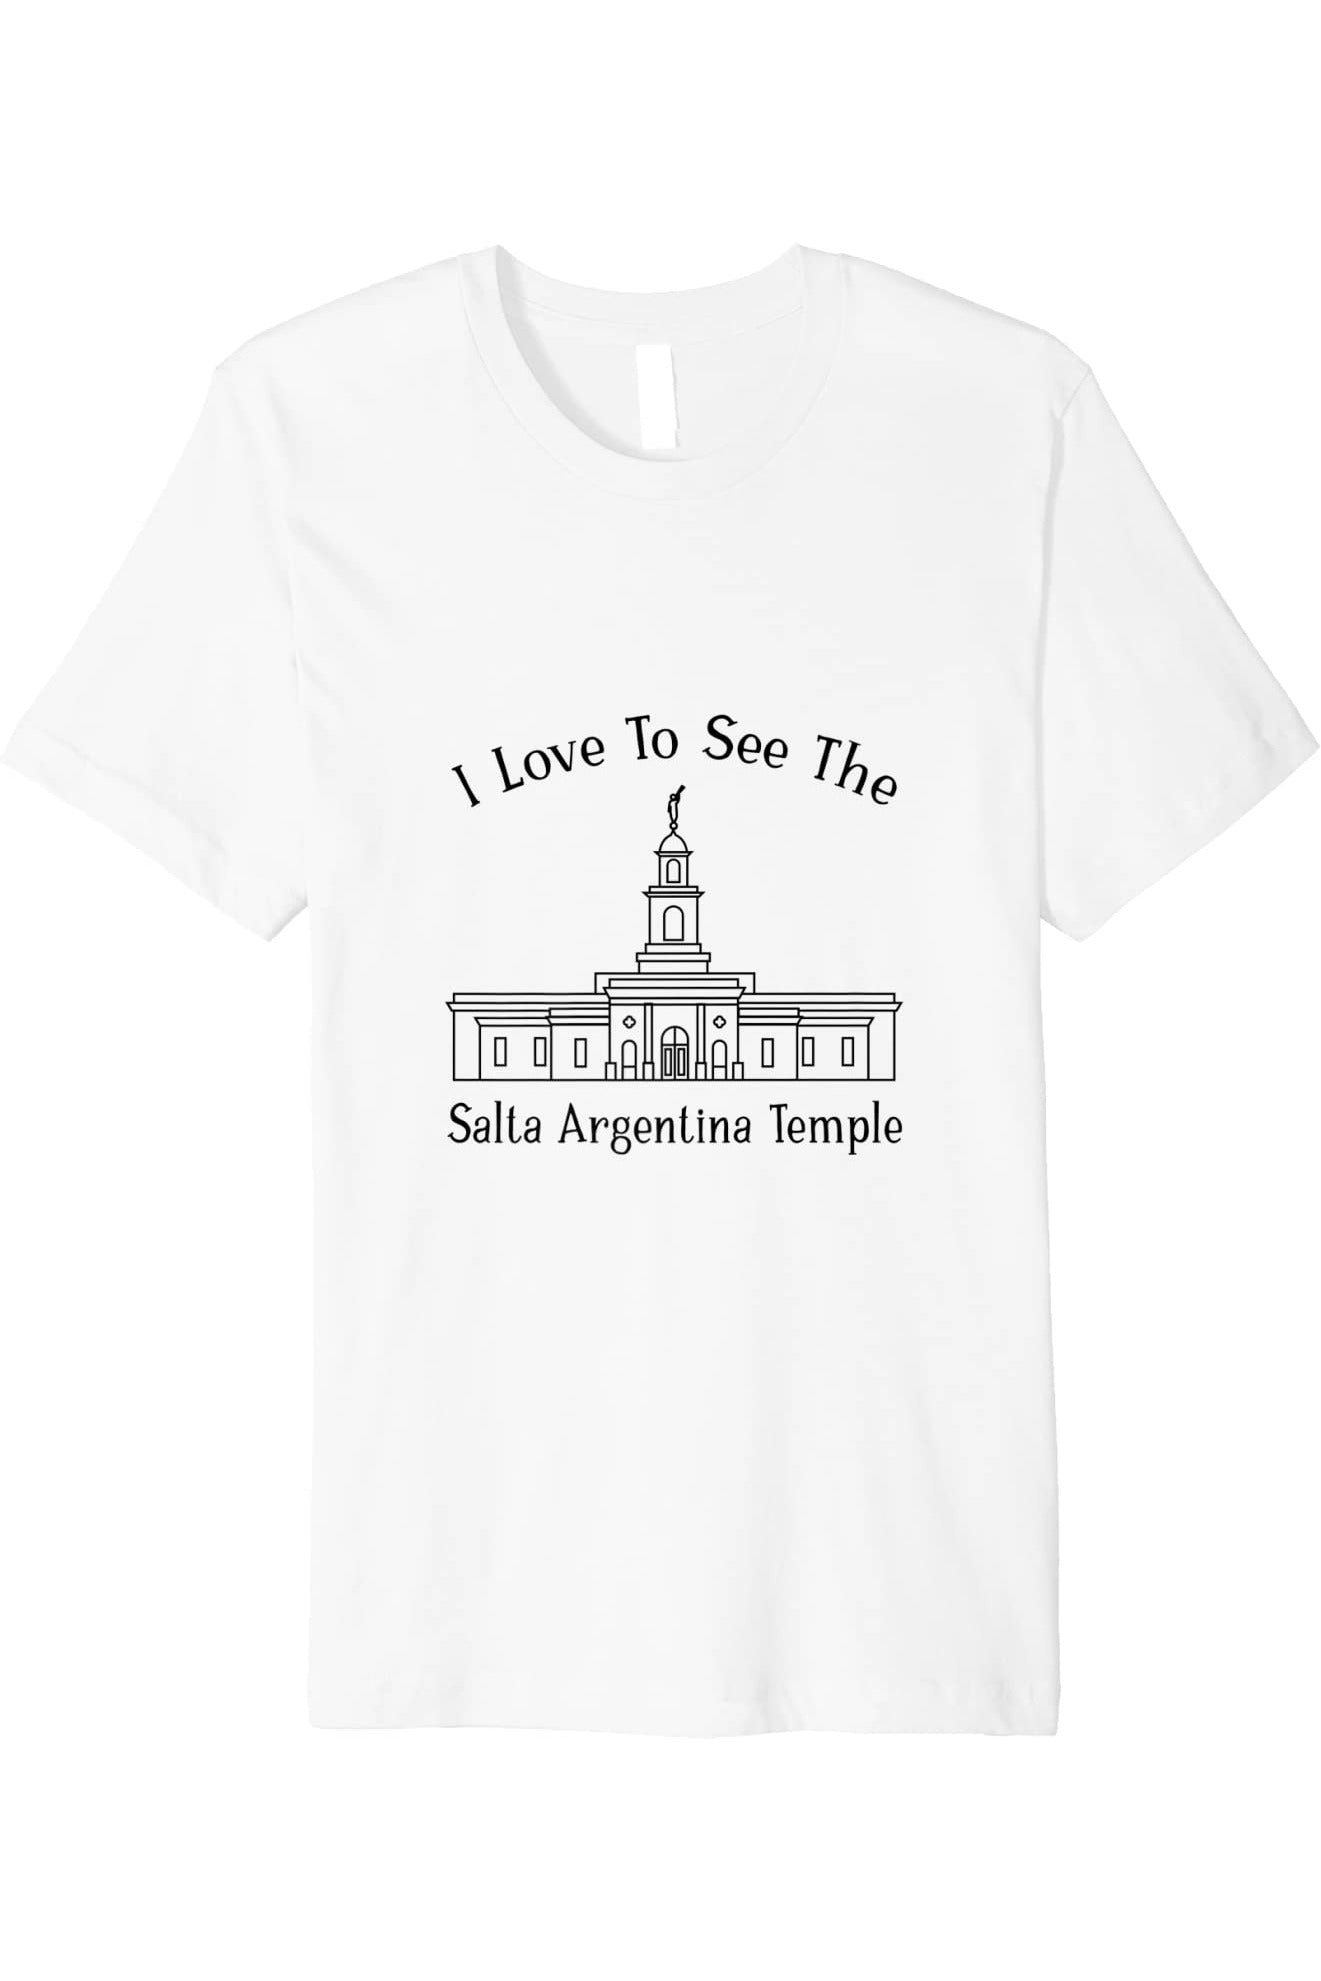 Salta Argentina Temple T-Shirt - Premium - Happy Style (English) US